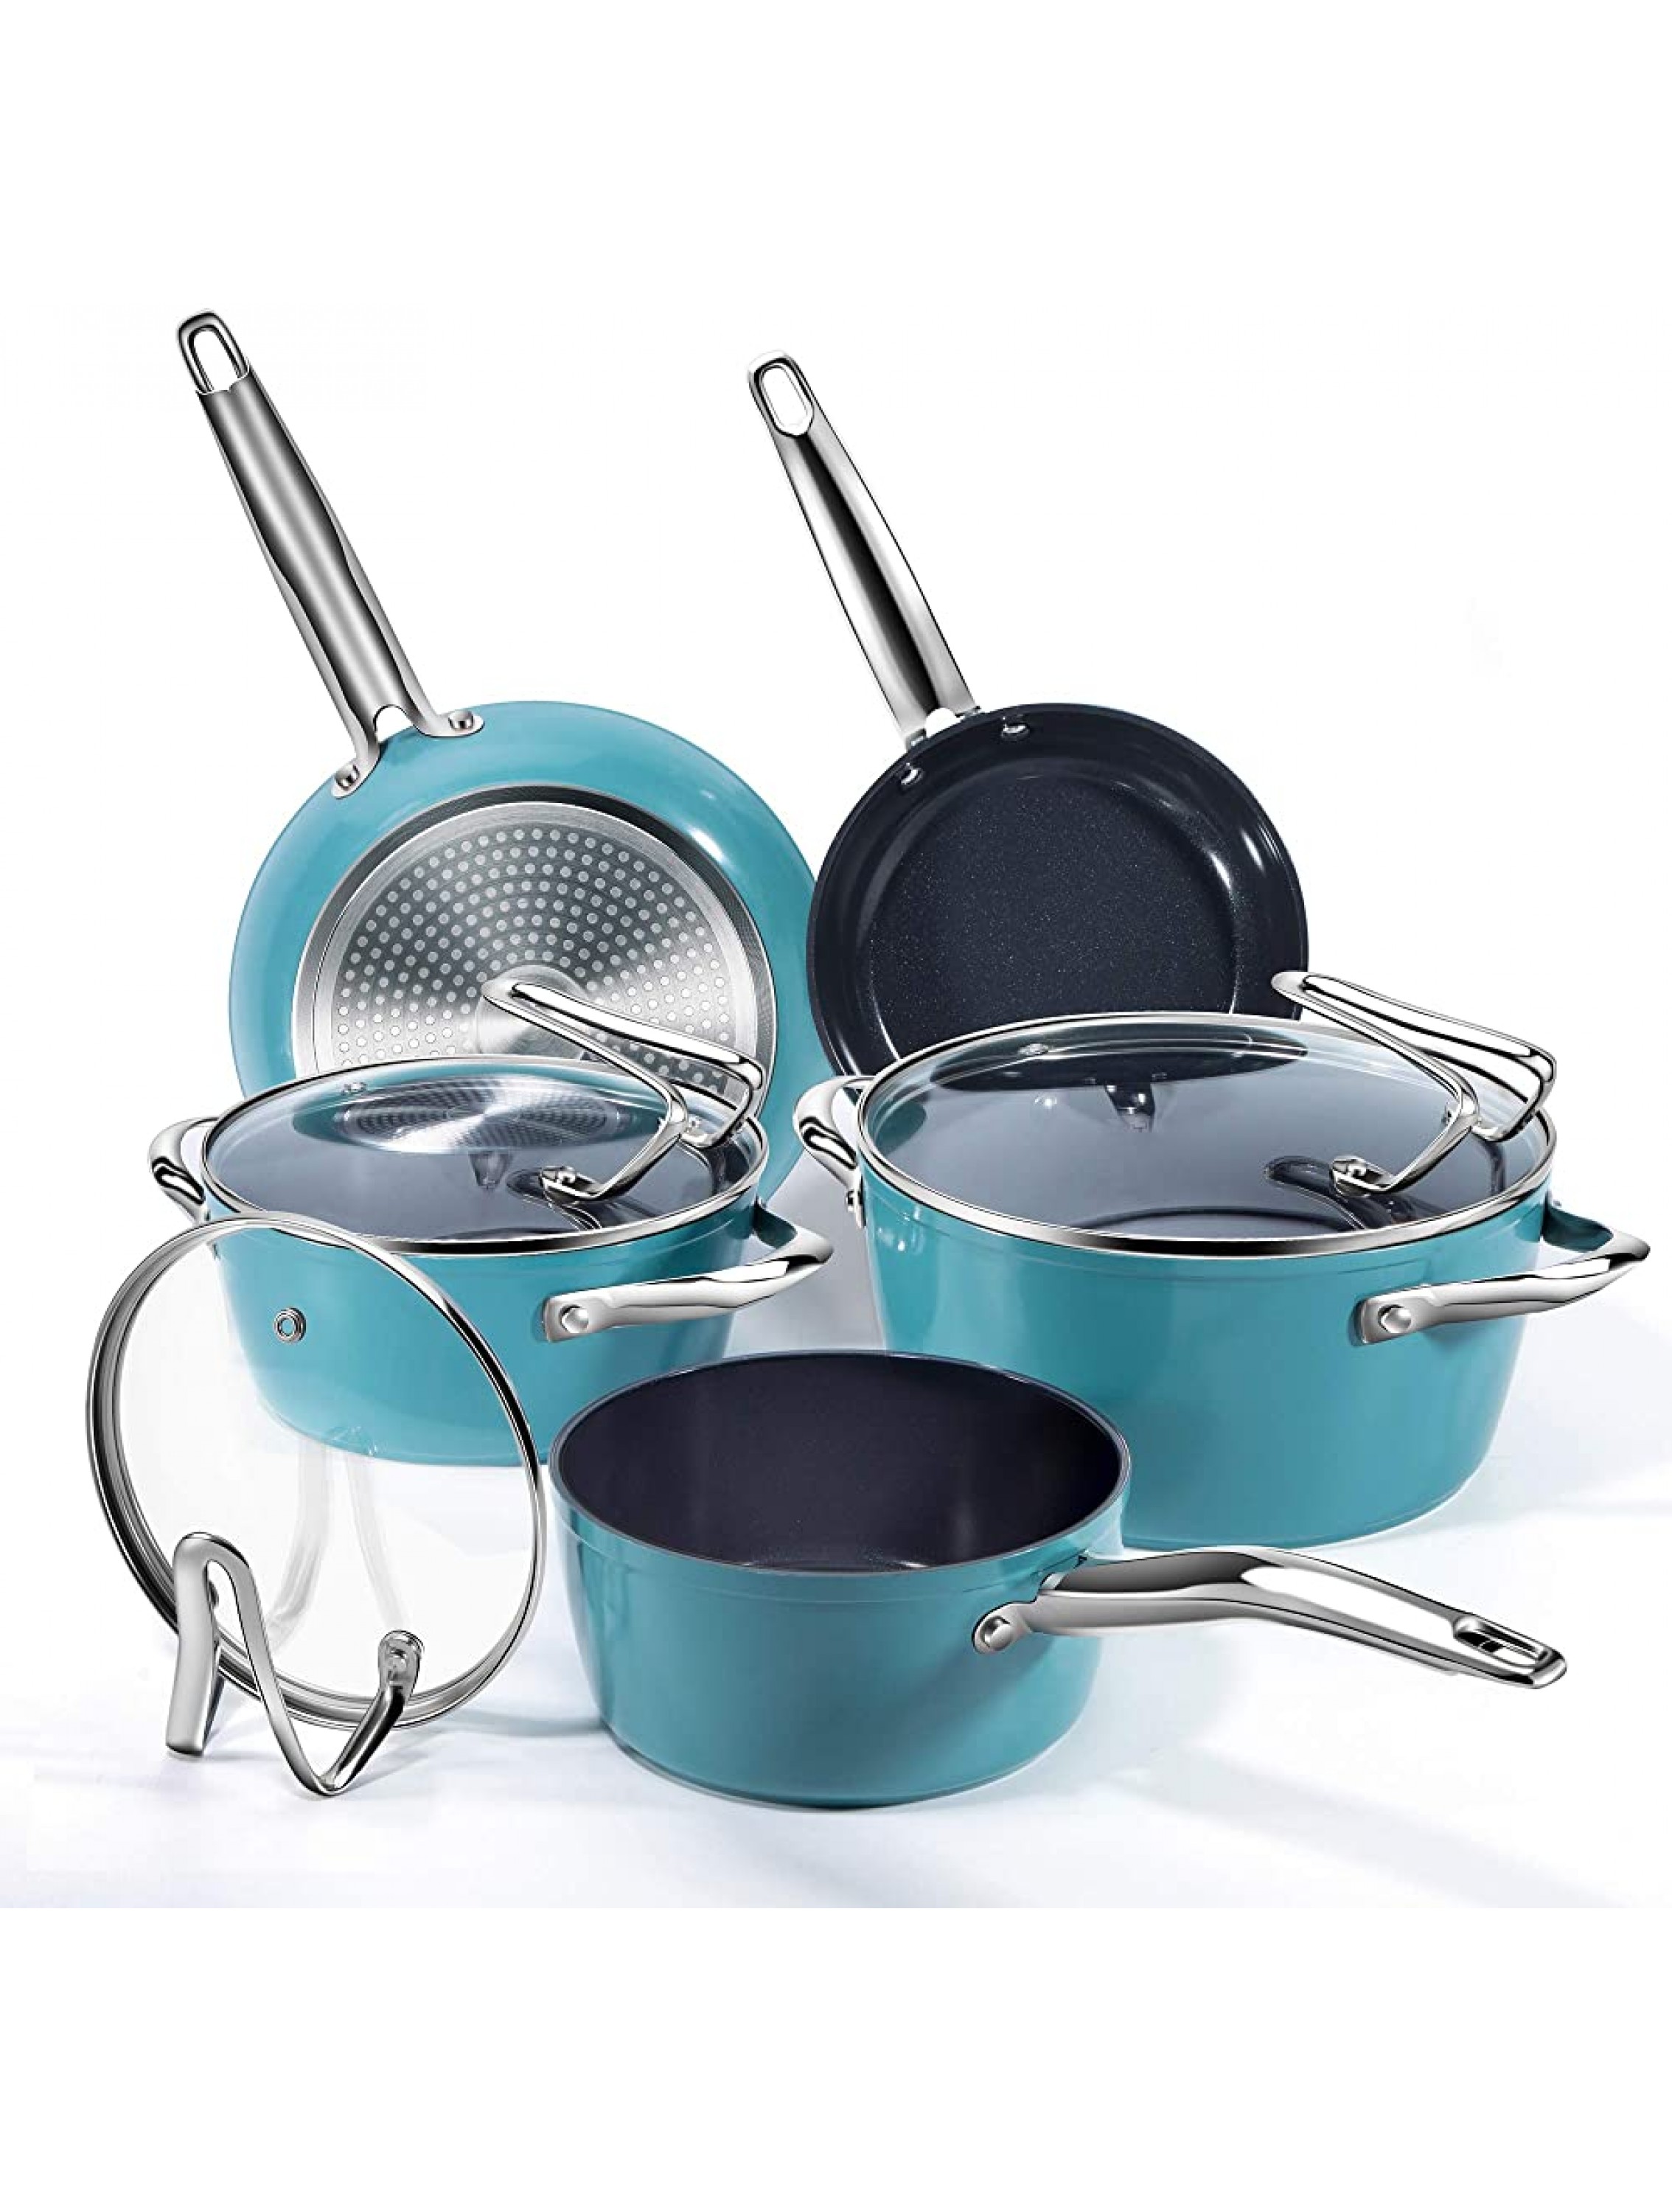 Nonstick Pot and Pan Cooking Set REDMOND Kitchen Ceramic Cookware Set for Stovetops Induction Cooktops Dishwasher Oven Safe 8 Pieces Blue - B8KDG83QZ